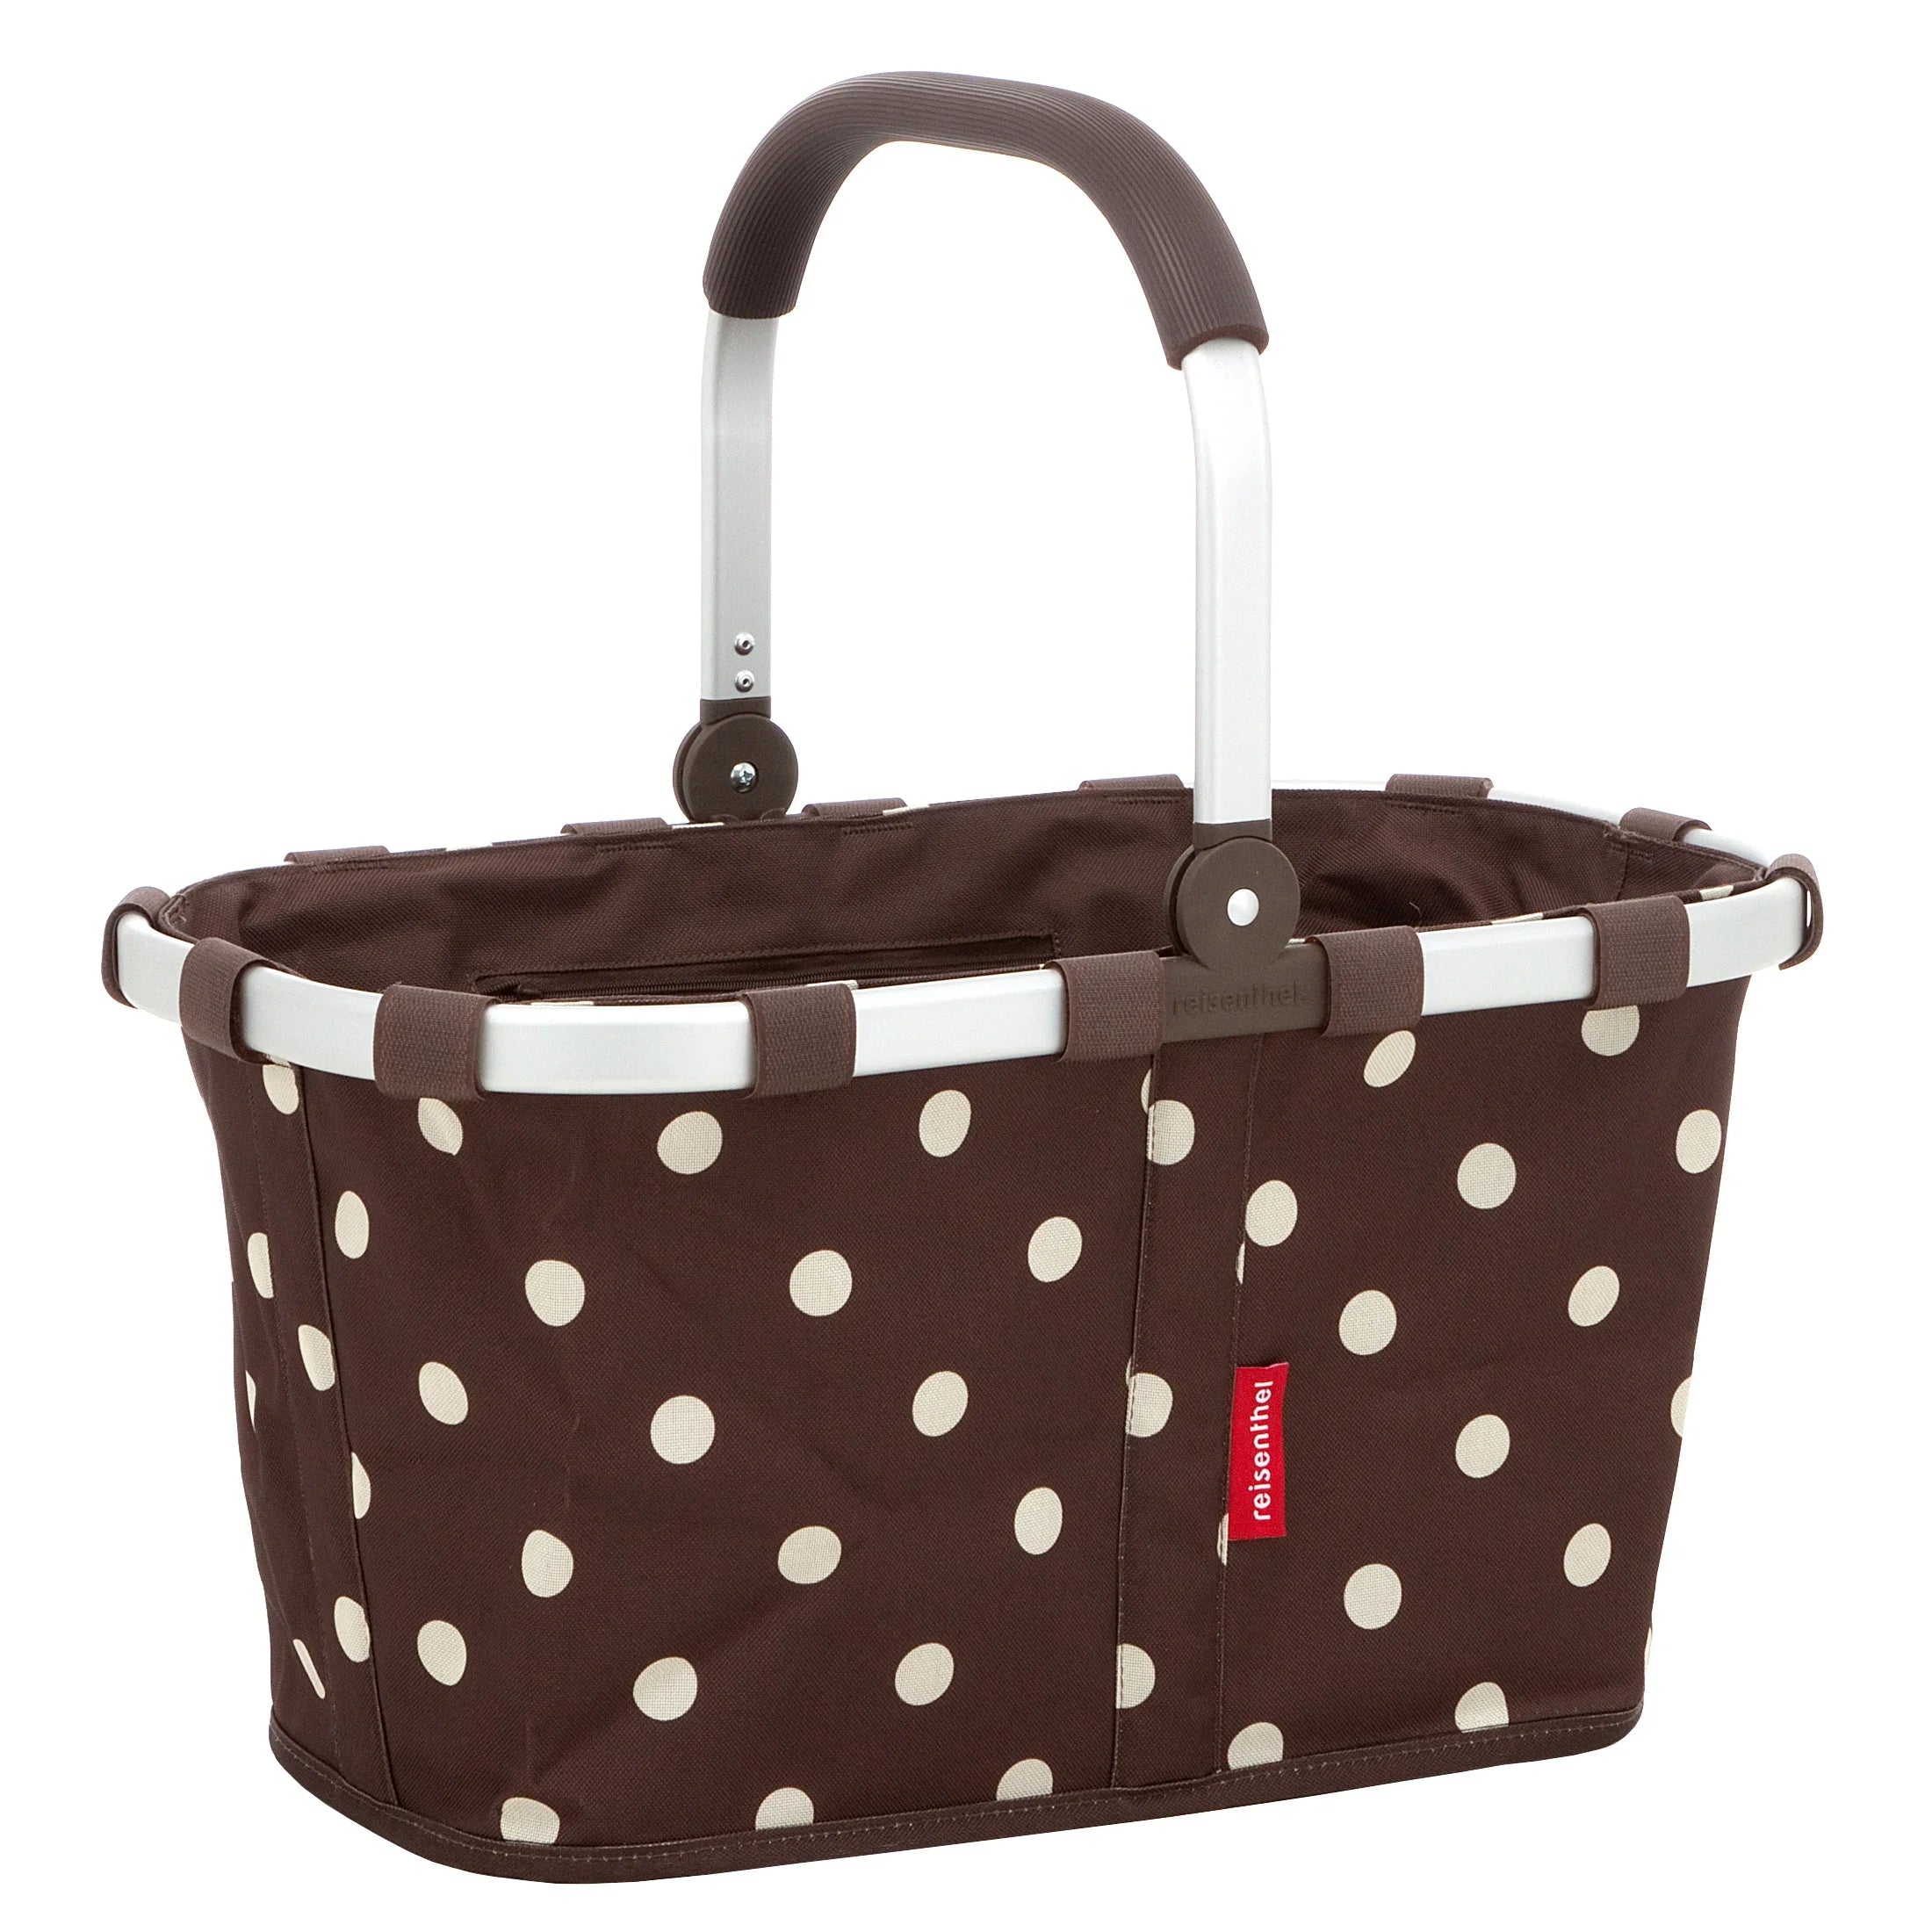 Reisenthel Shopping Carrybag shopping basket 48 cm - signature navy